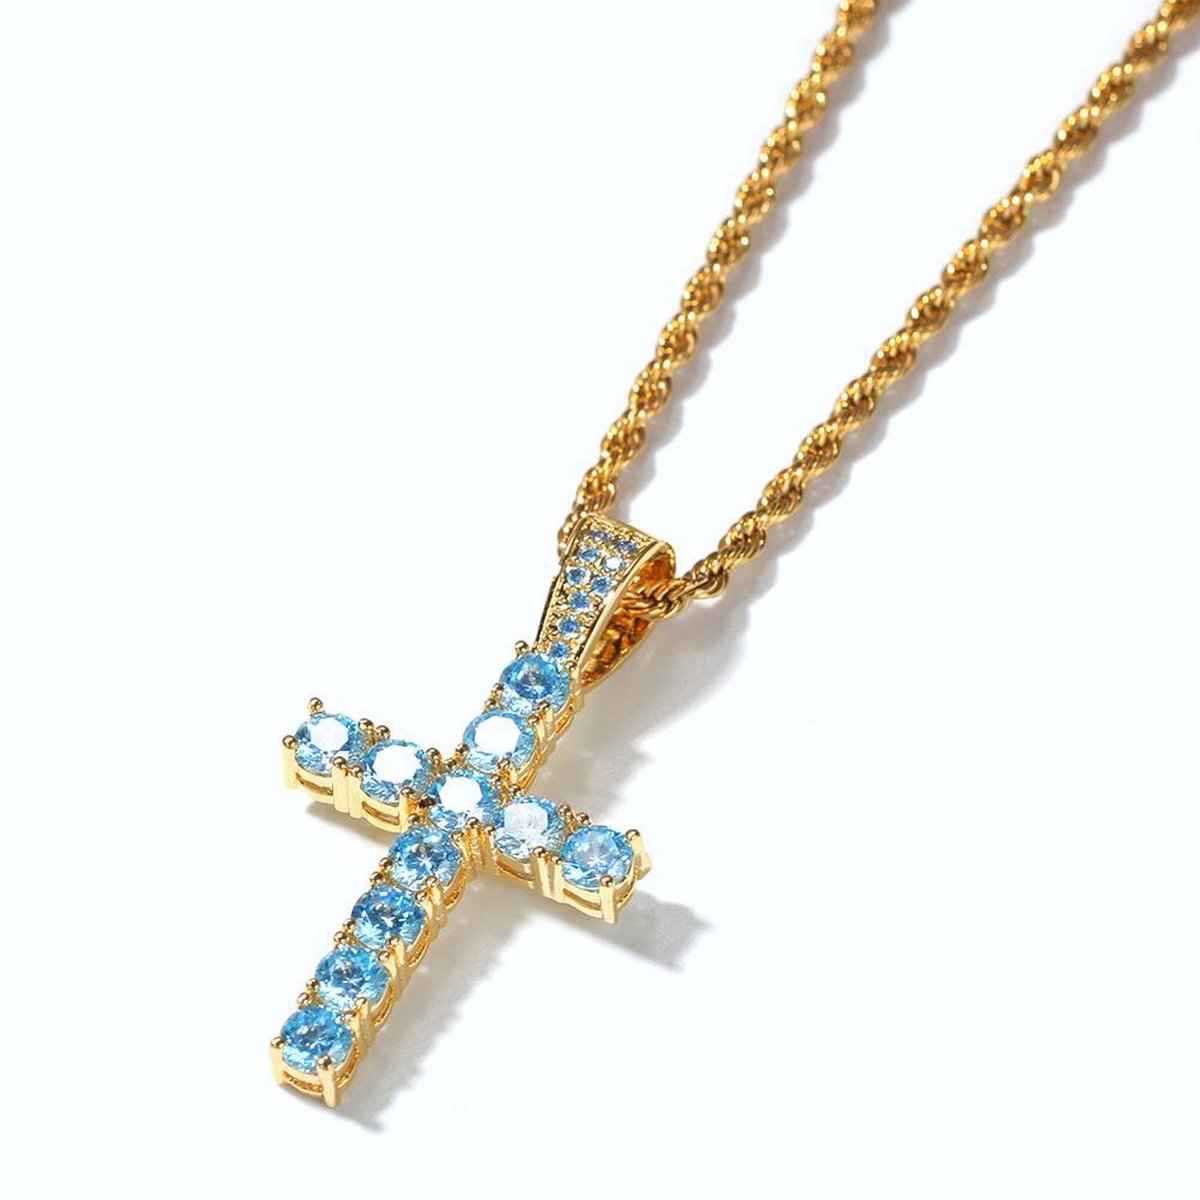 ICYBOY 18K Religieus Heren Ketting met Blauwe Krystallen Kruis Verguld Goud [GOLD-PLATED] [ICED OUT] [20 - 50CM] - Gold Plated Cross Pendant Necklace Blue Crystal Cross